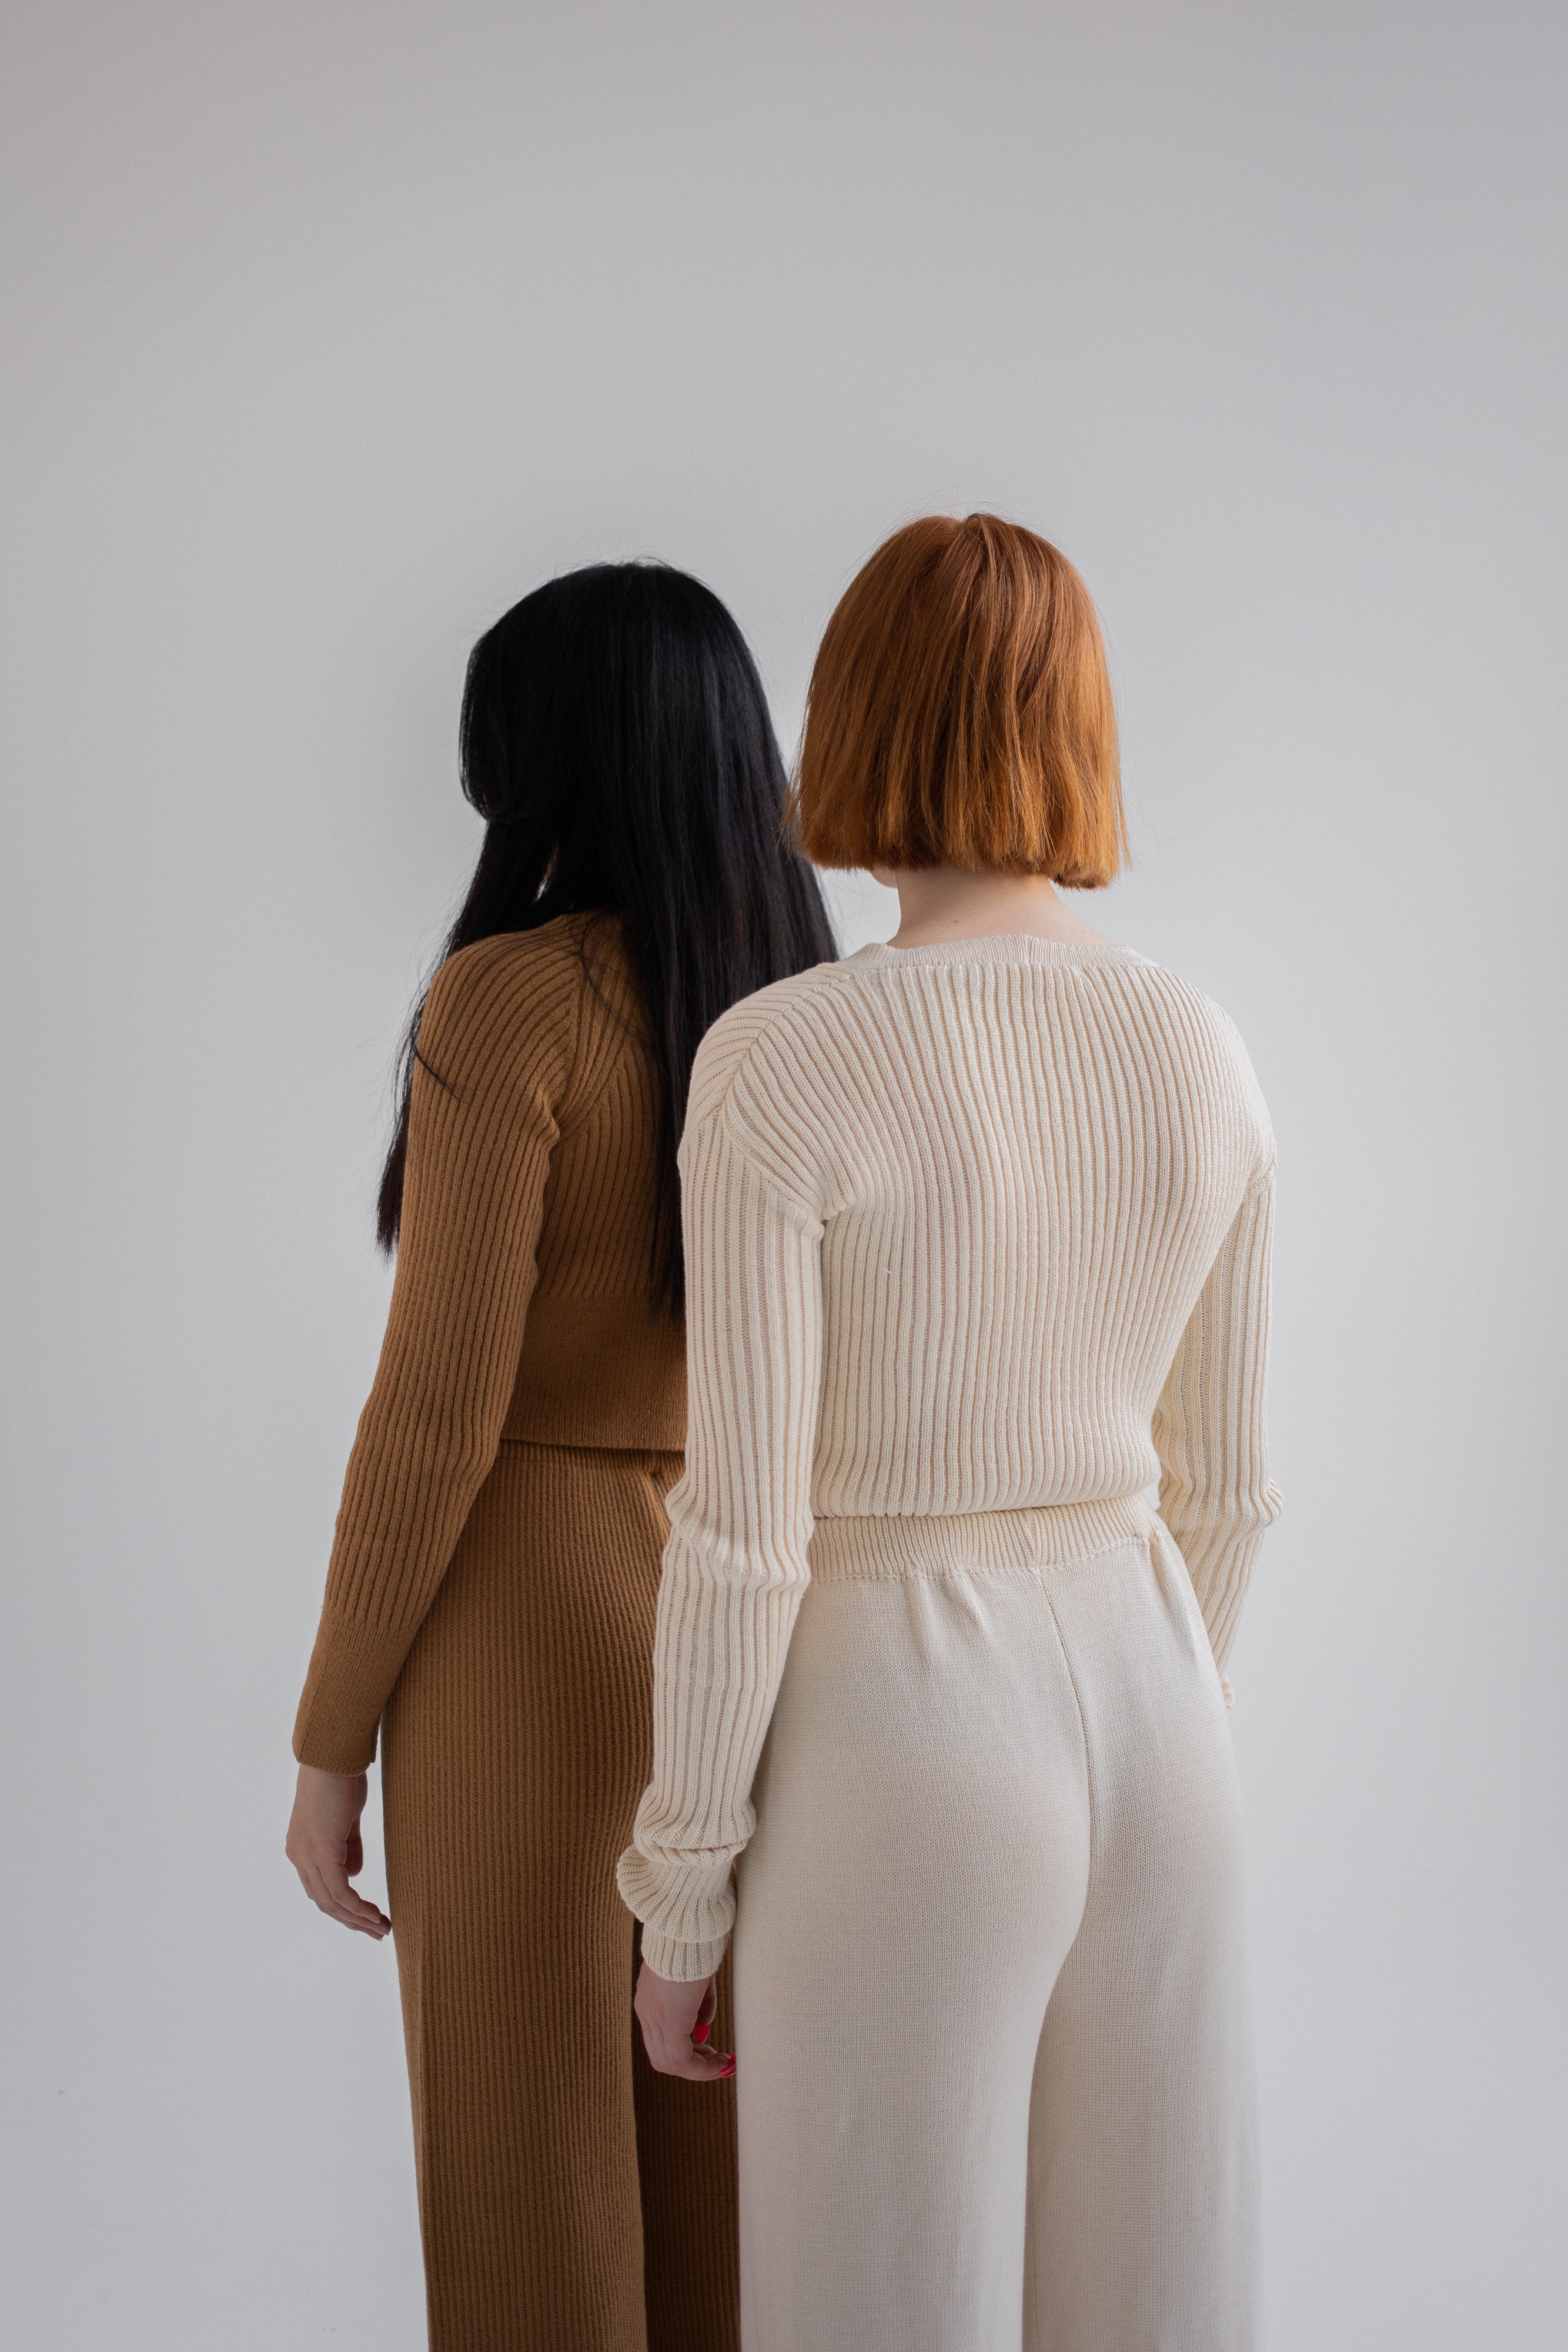 Two women dressed in comfortable pants. | Source: Pexels